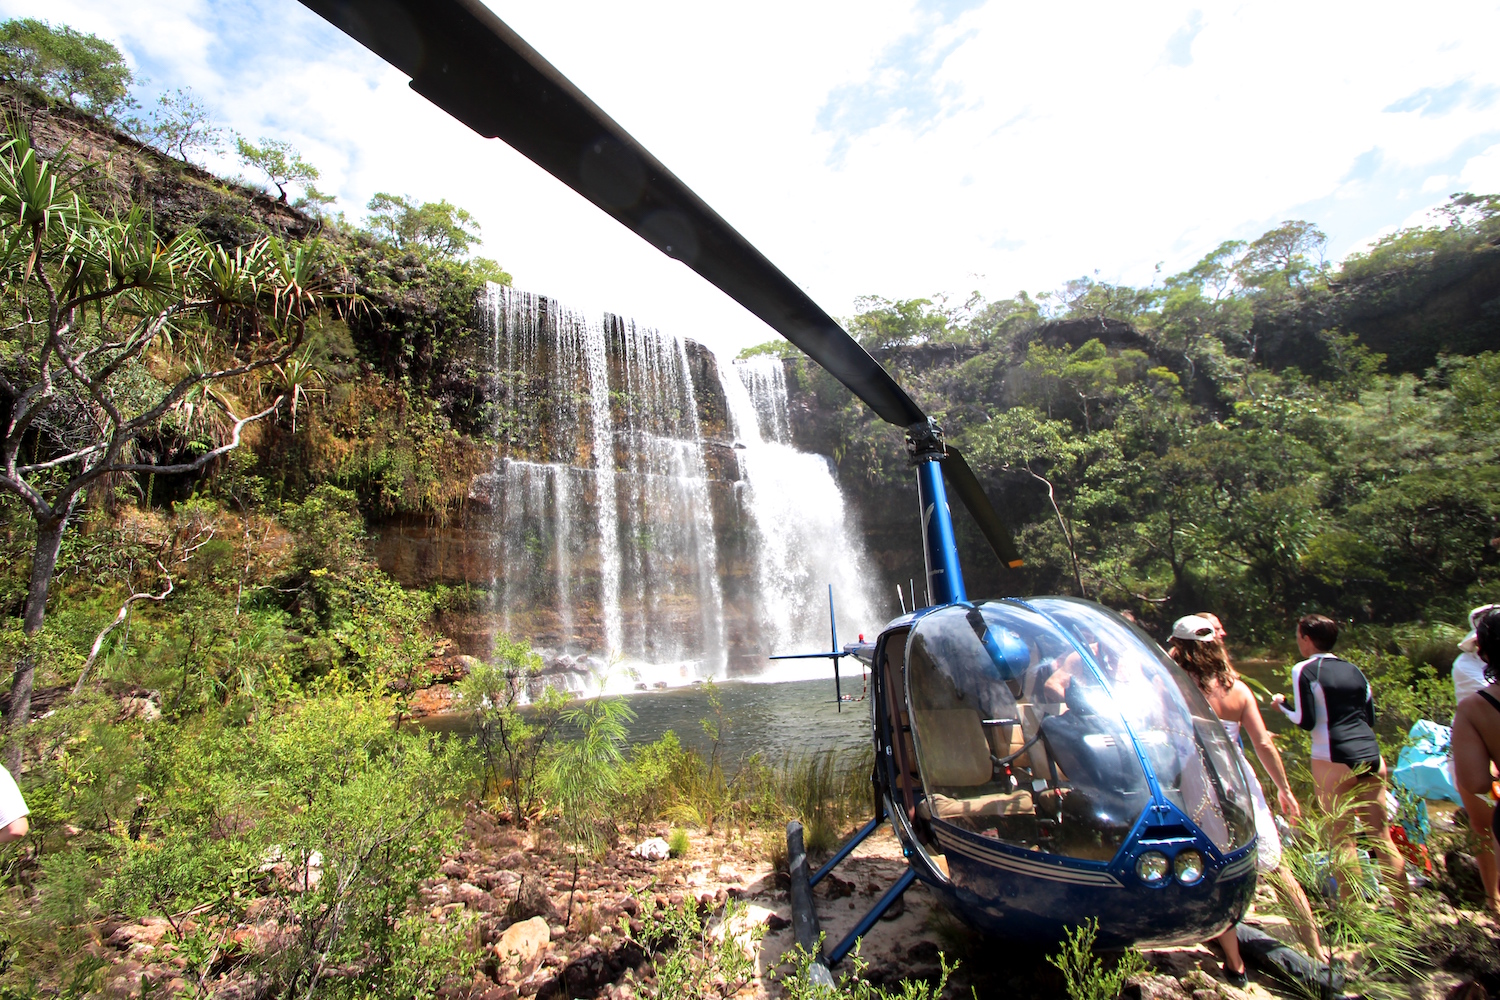 On your luxury vacation in Australia go waterfall exploring on Haggerstone Island